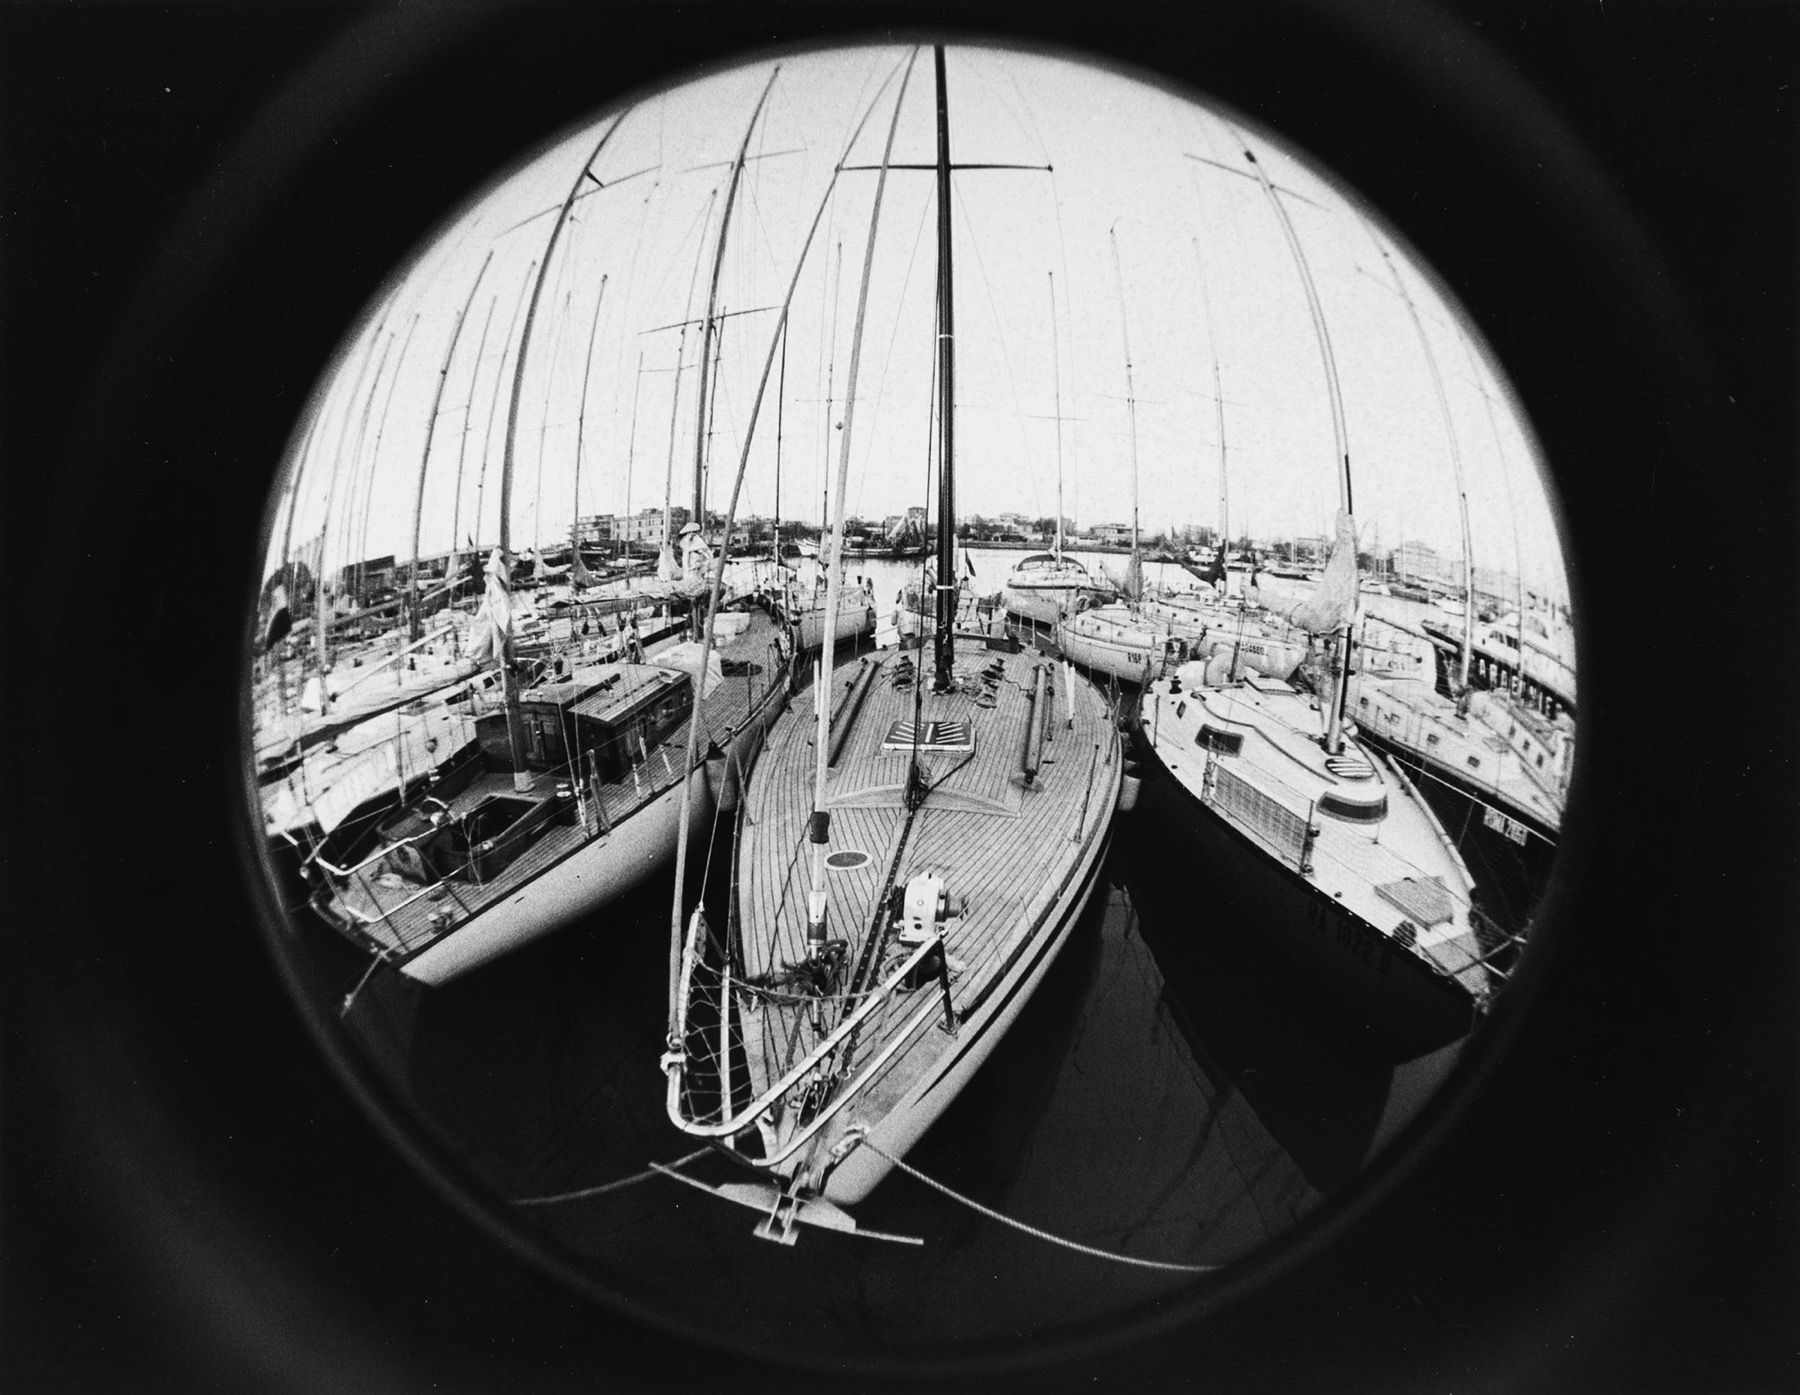 Marcello MENCARINI 船只，1960年

复古明胶银印刷品
9.3 x 12 in.
摄影师的信用印章在背面
本拍品受艺术家转售权保护。